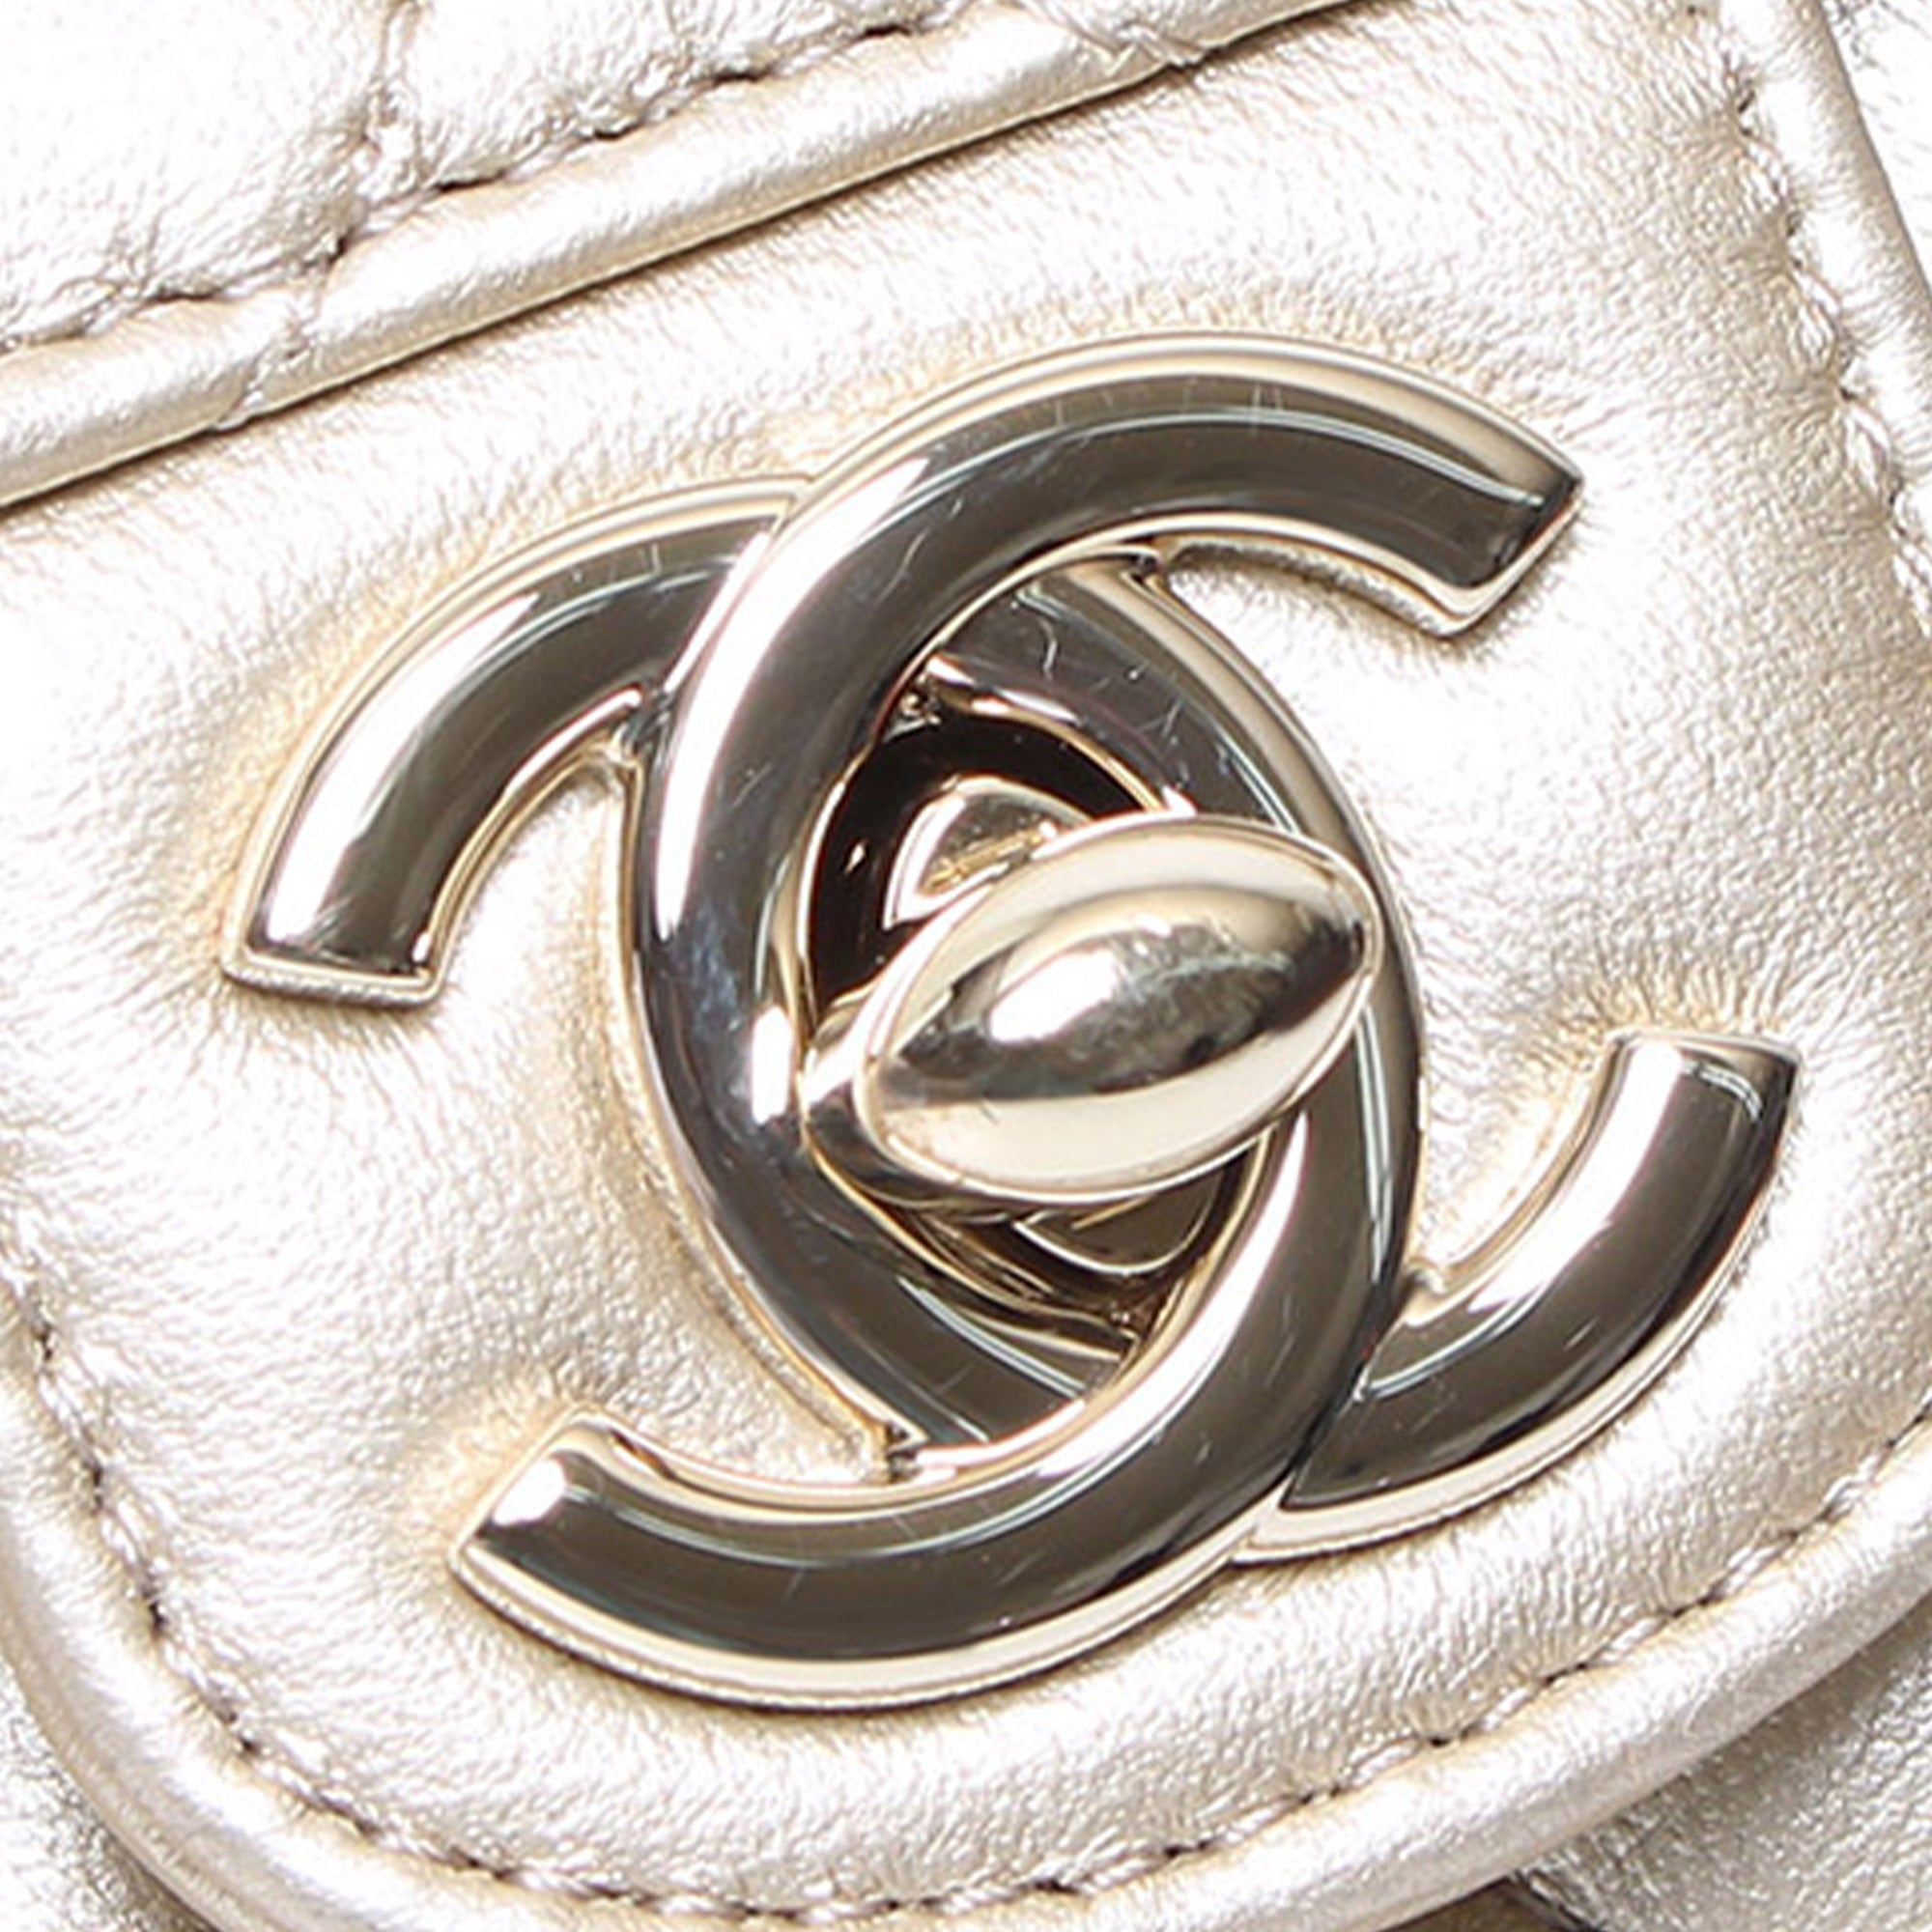 Chanel CC in Love Heart Crossbody Mini Gold